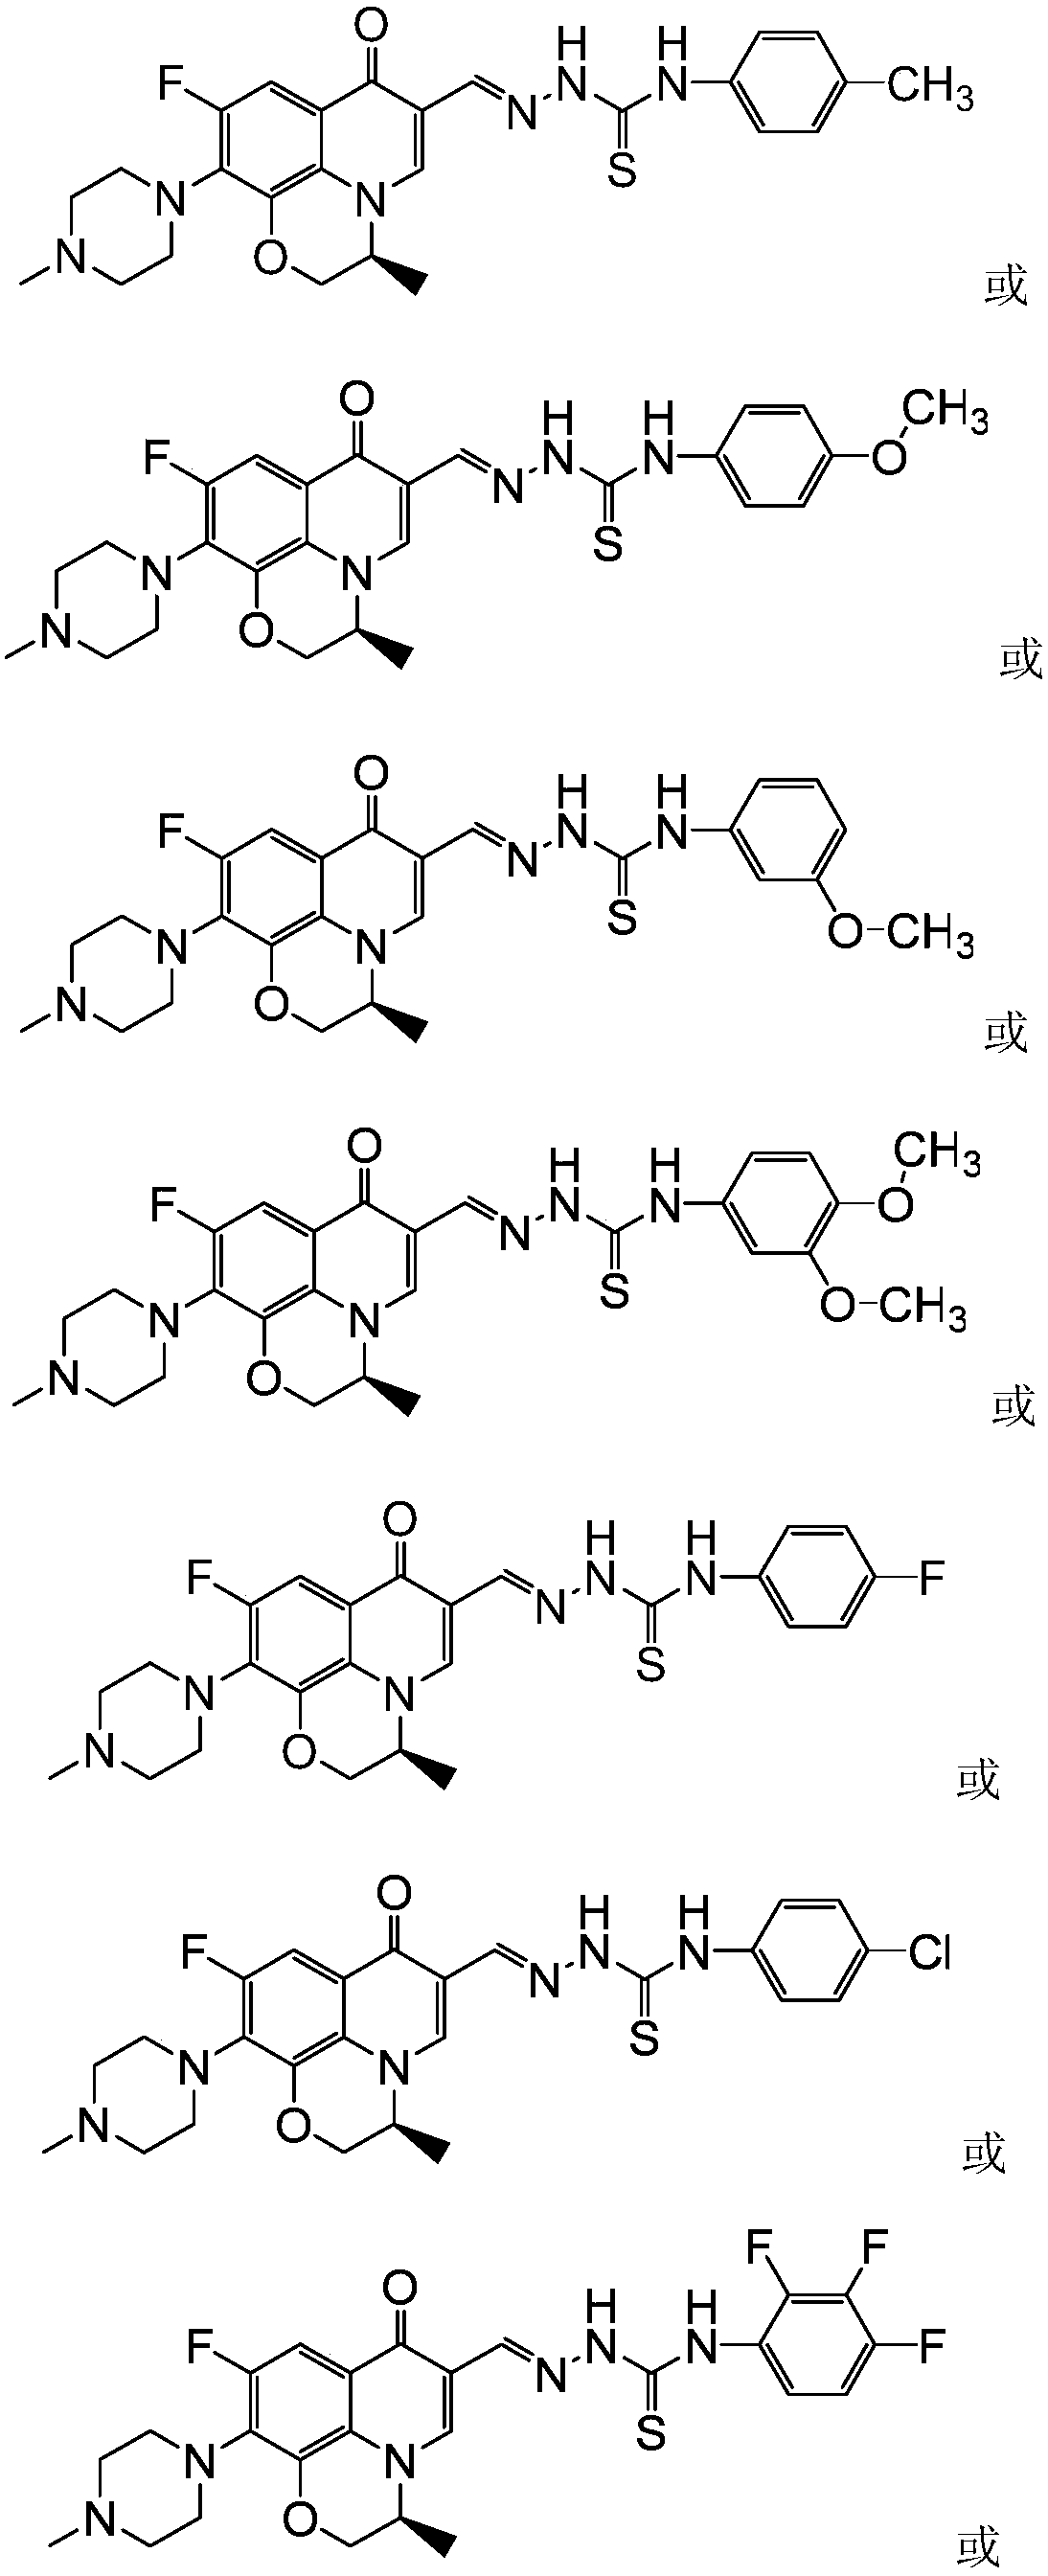 Levofloxacin aldehyde acetal 4-aryl thiosemicarbazide derivatives and its preparation method and application